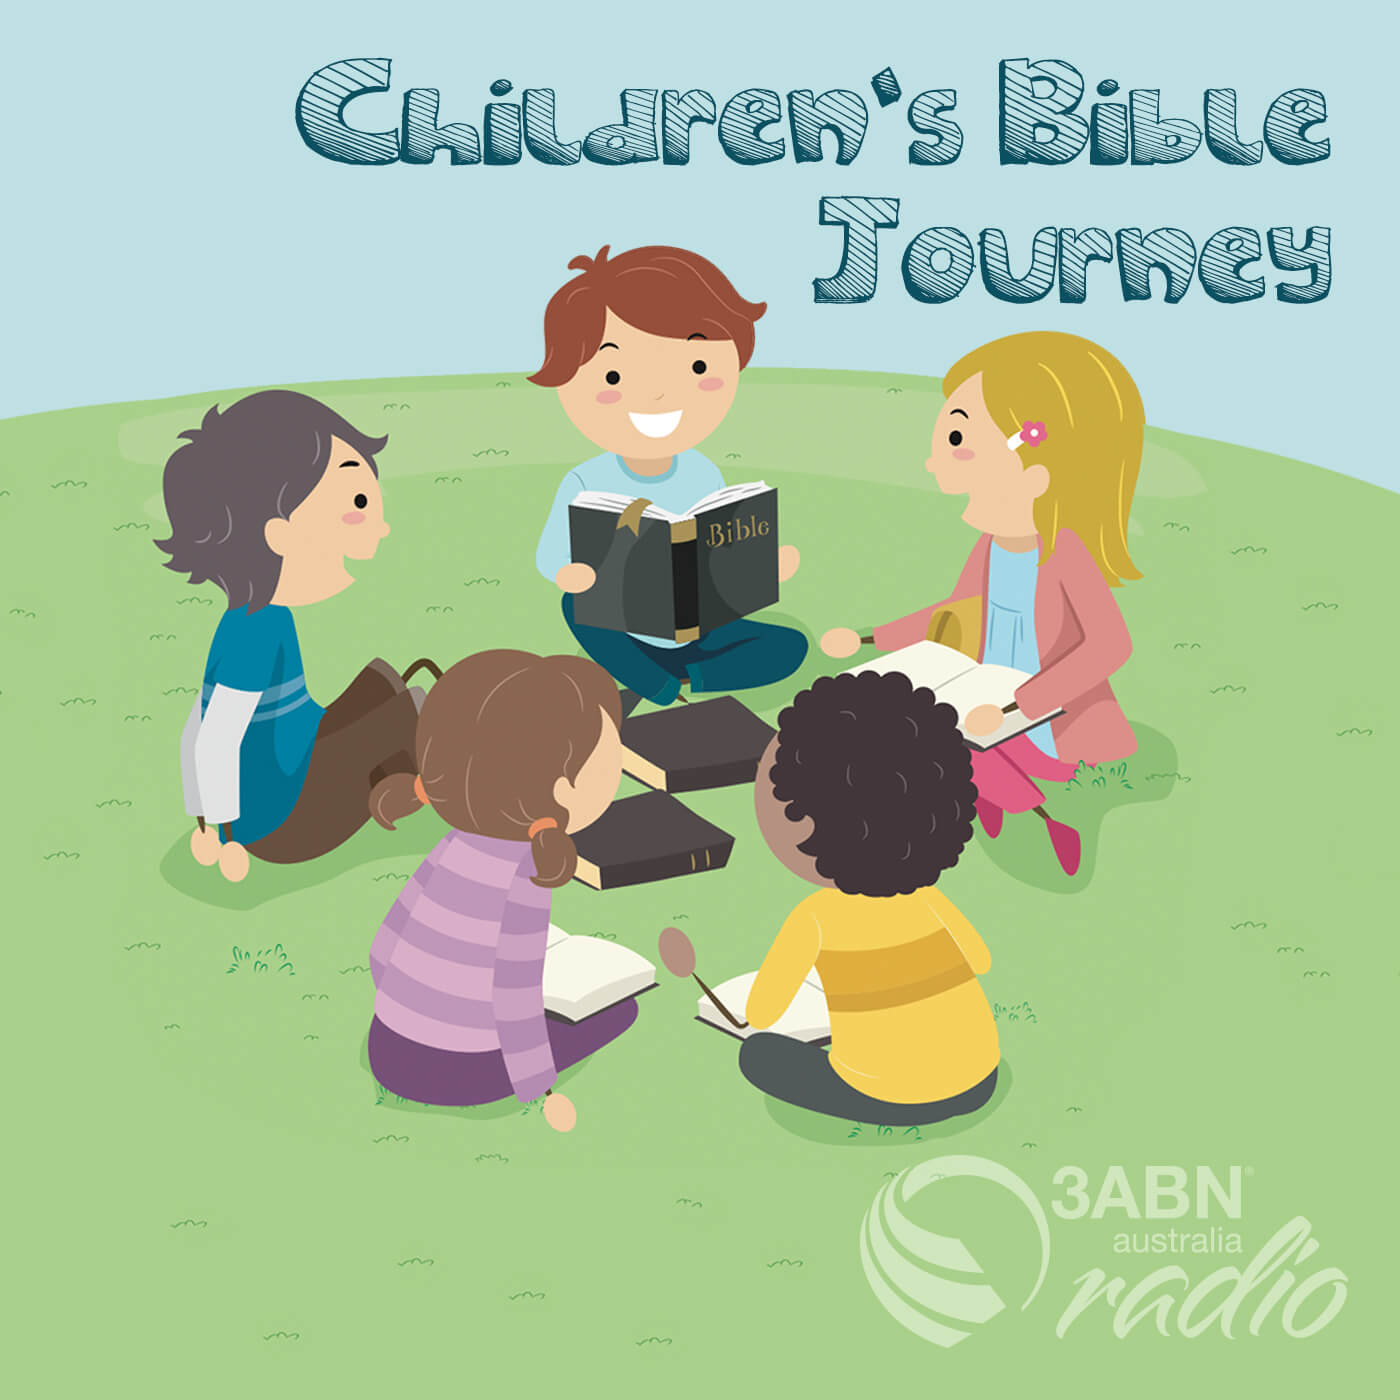 Children's Bible Journey - 2153